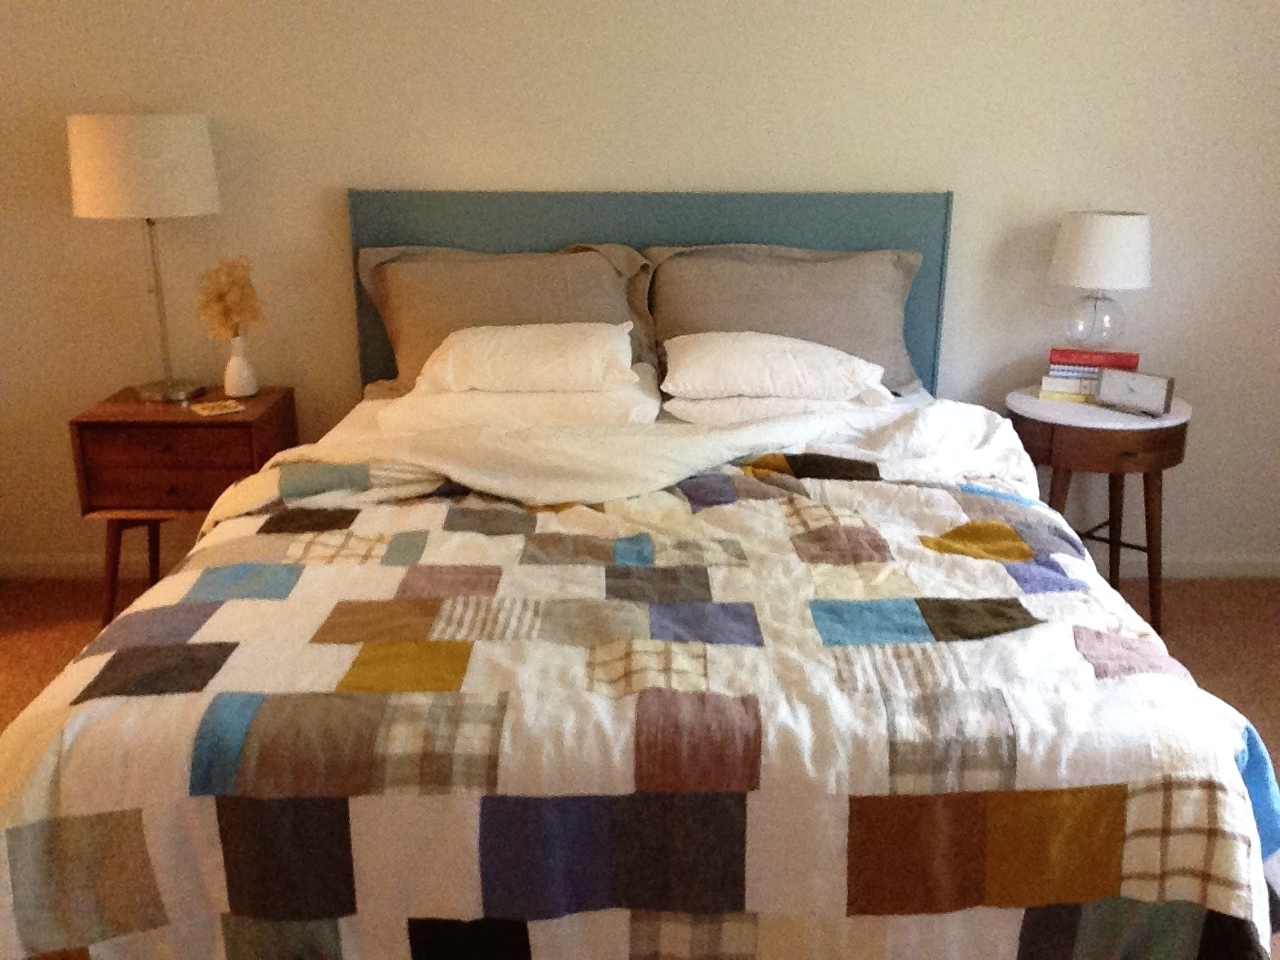 Pete, 100% linen bedding set with patchwork duvet Sheet set of bleached linen, euro shams in natural and d...